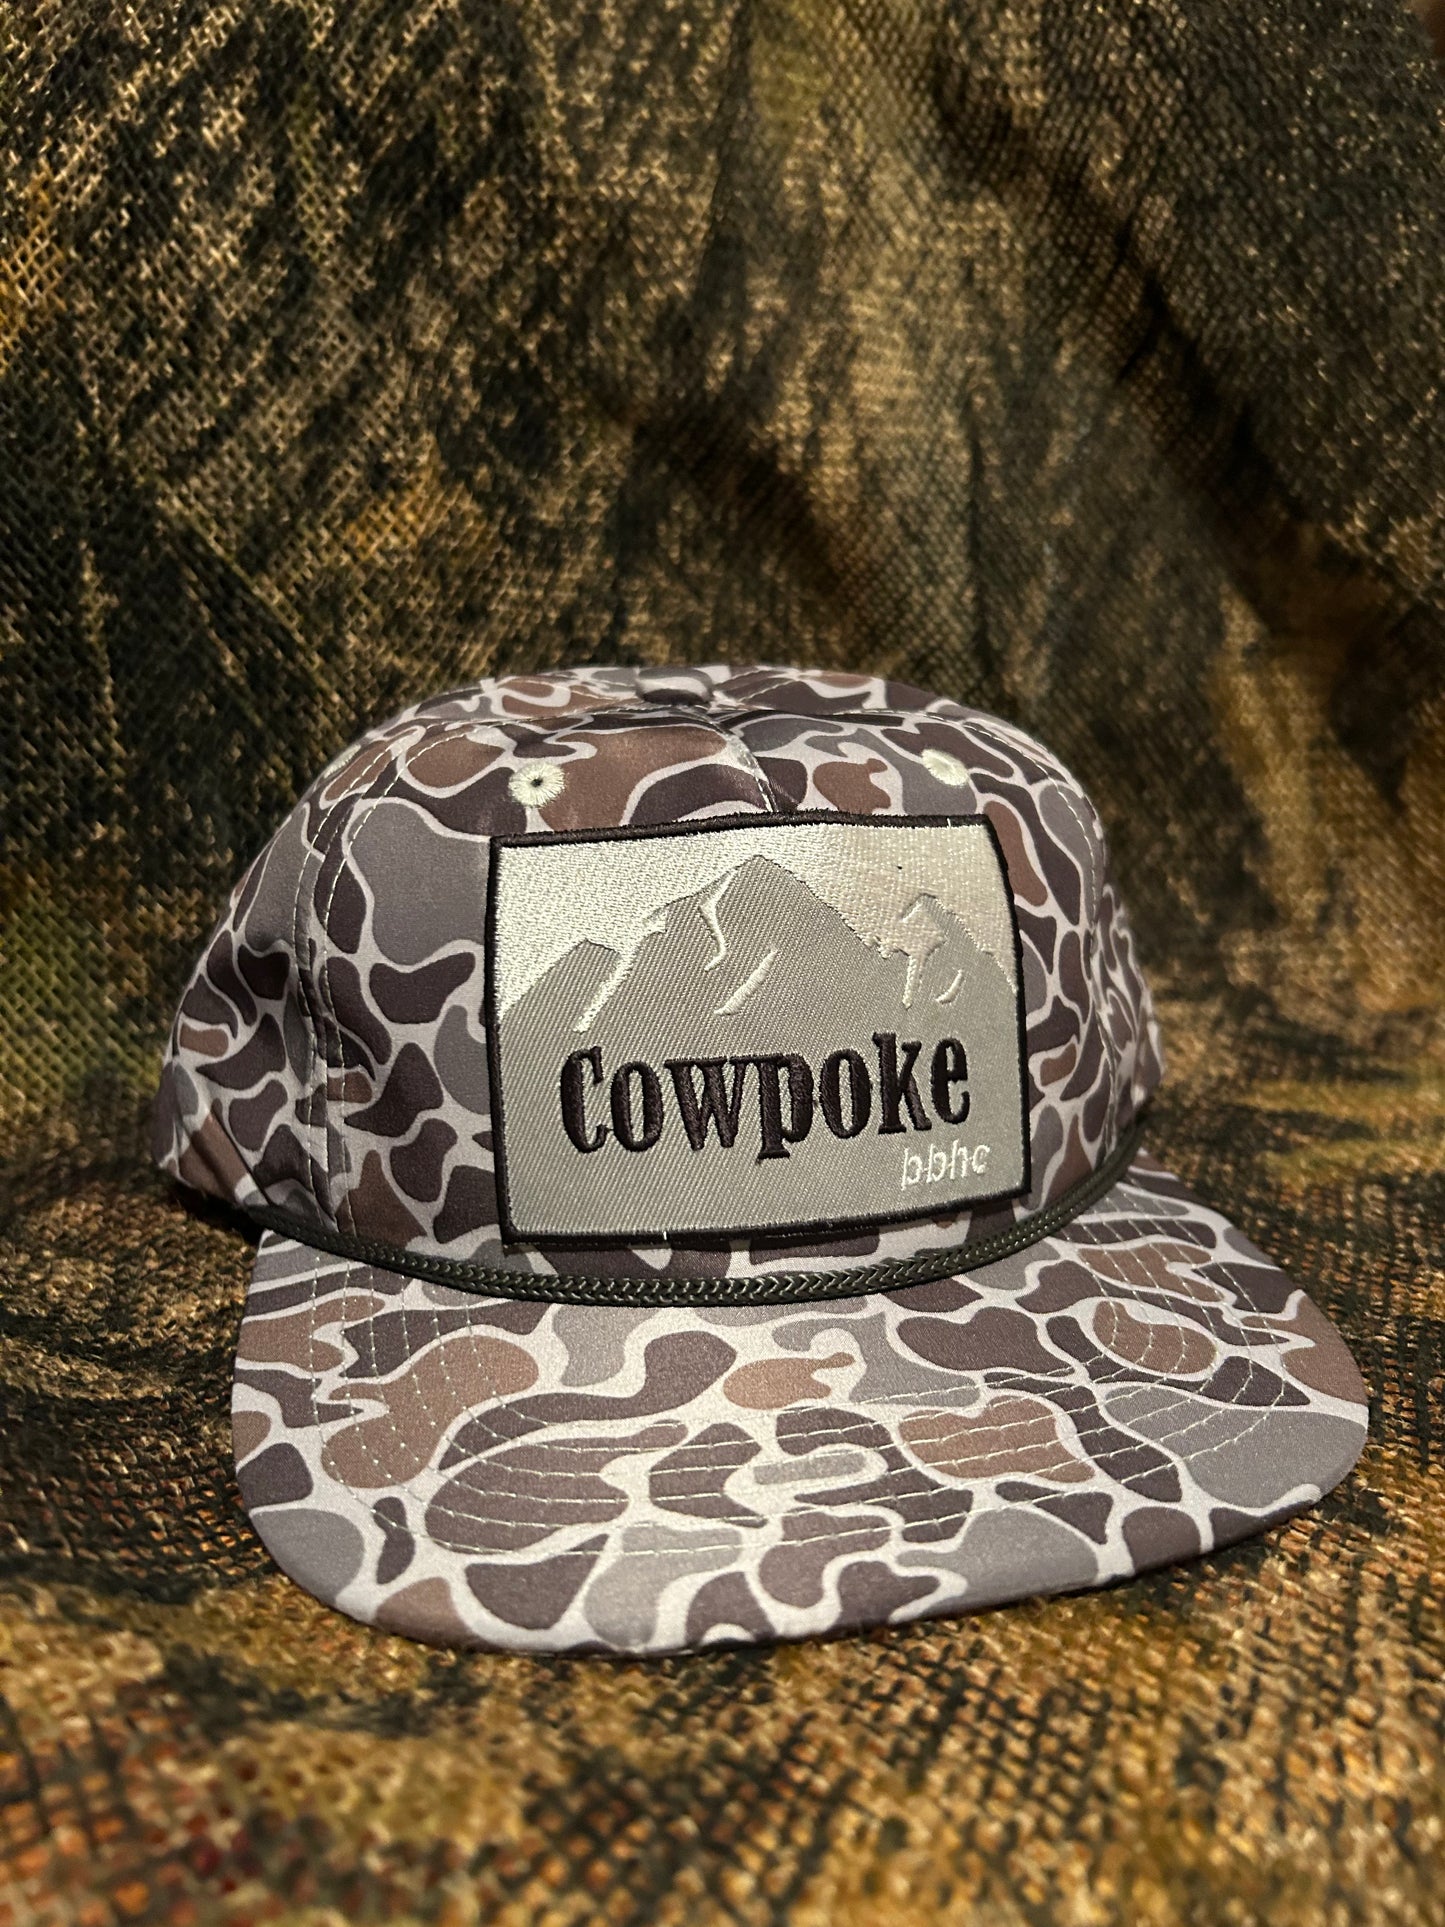 Cowpoke Smokeshow Camo ropebrim SnapBack hat